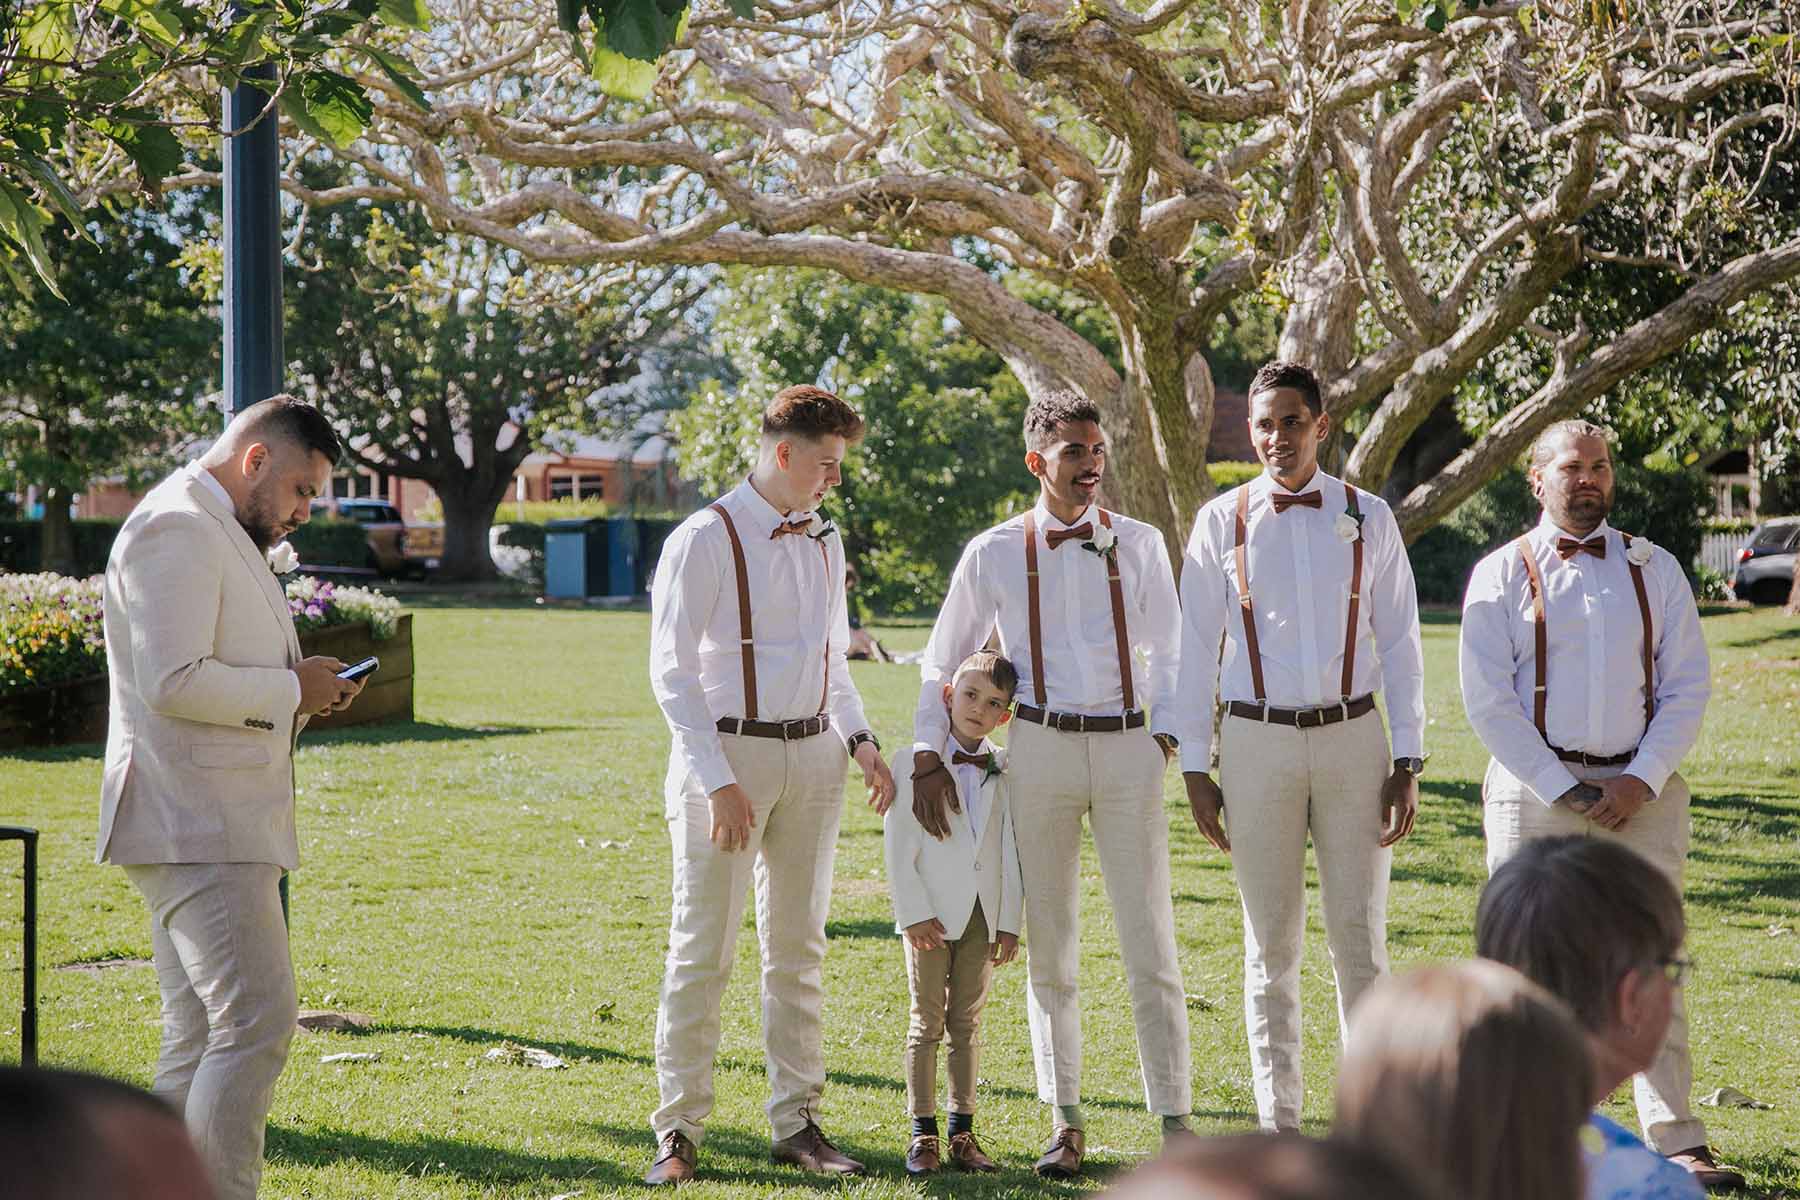 Wedding Photography - Groomsmen at ceremony